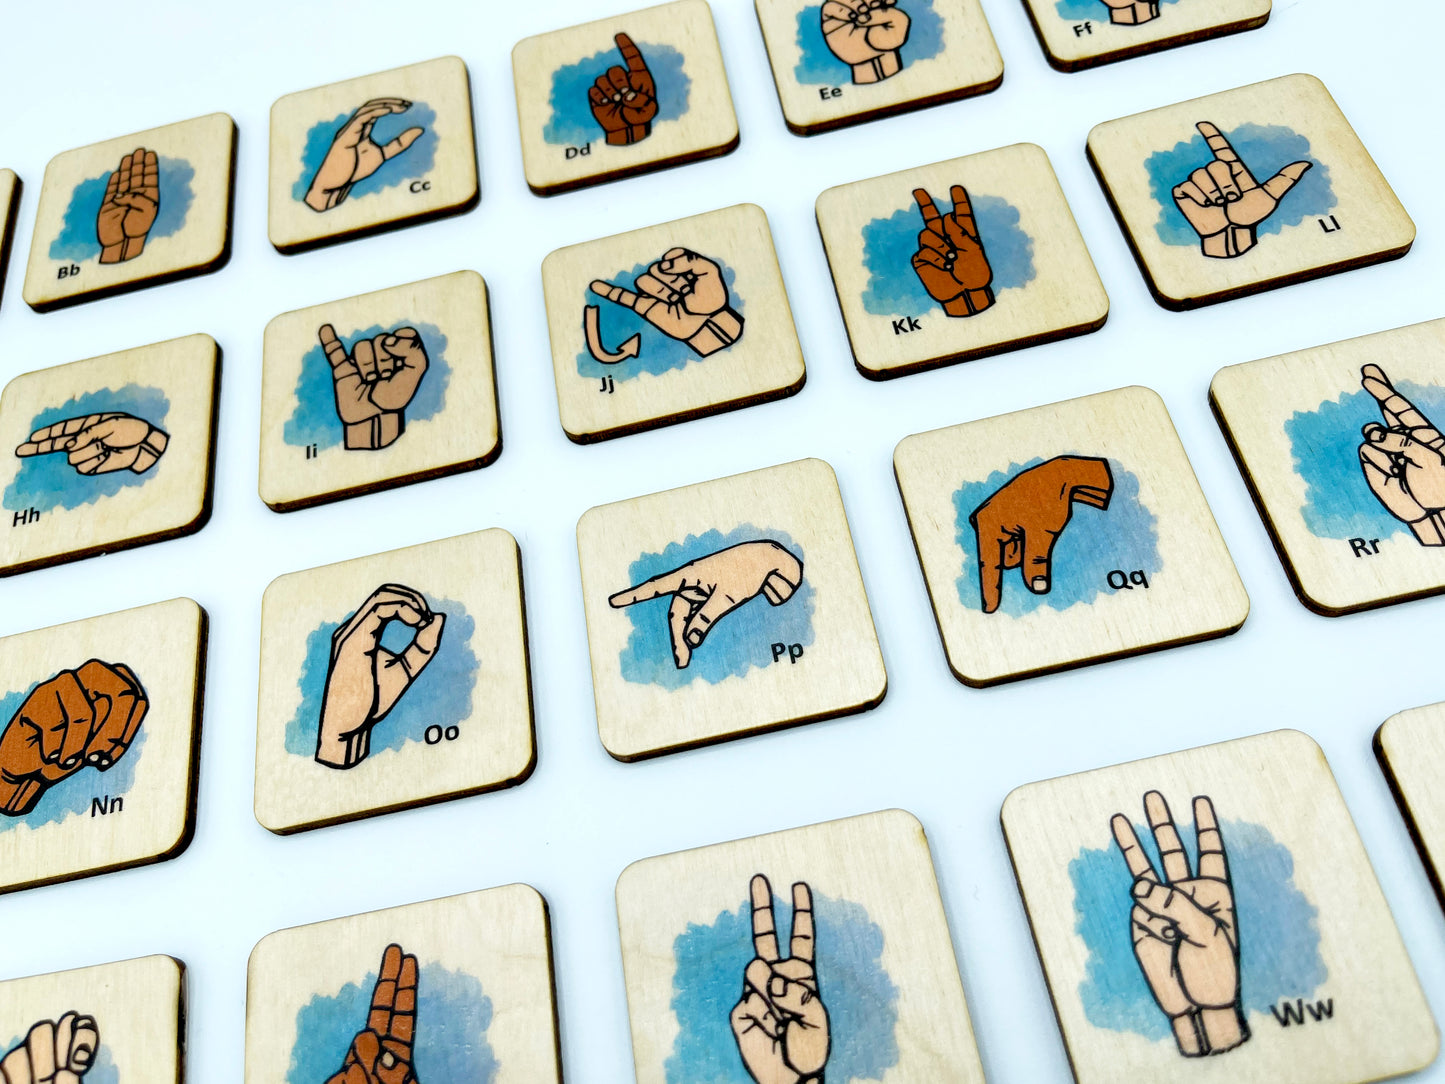 Sign language alphabet wooden cards